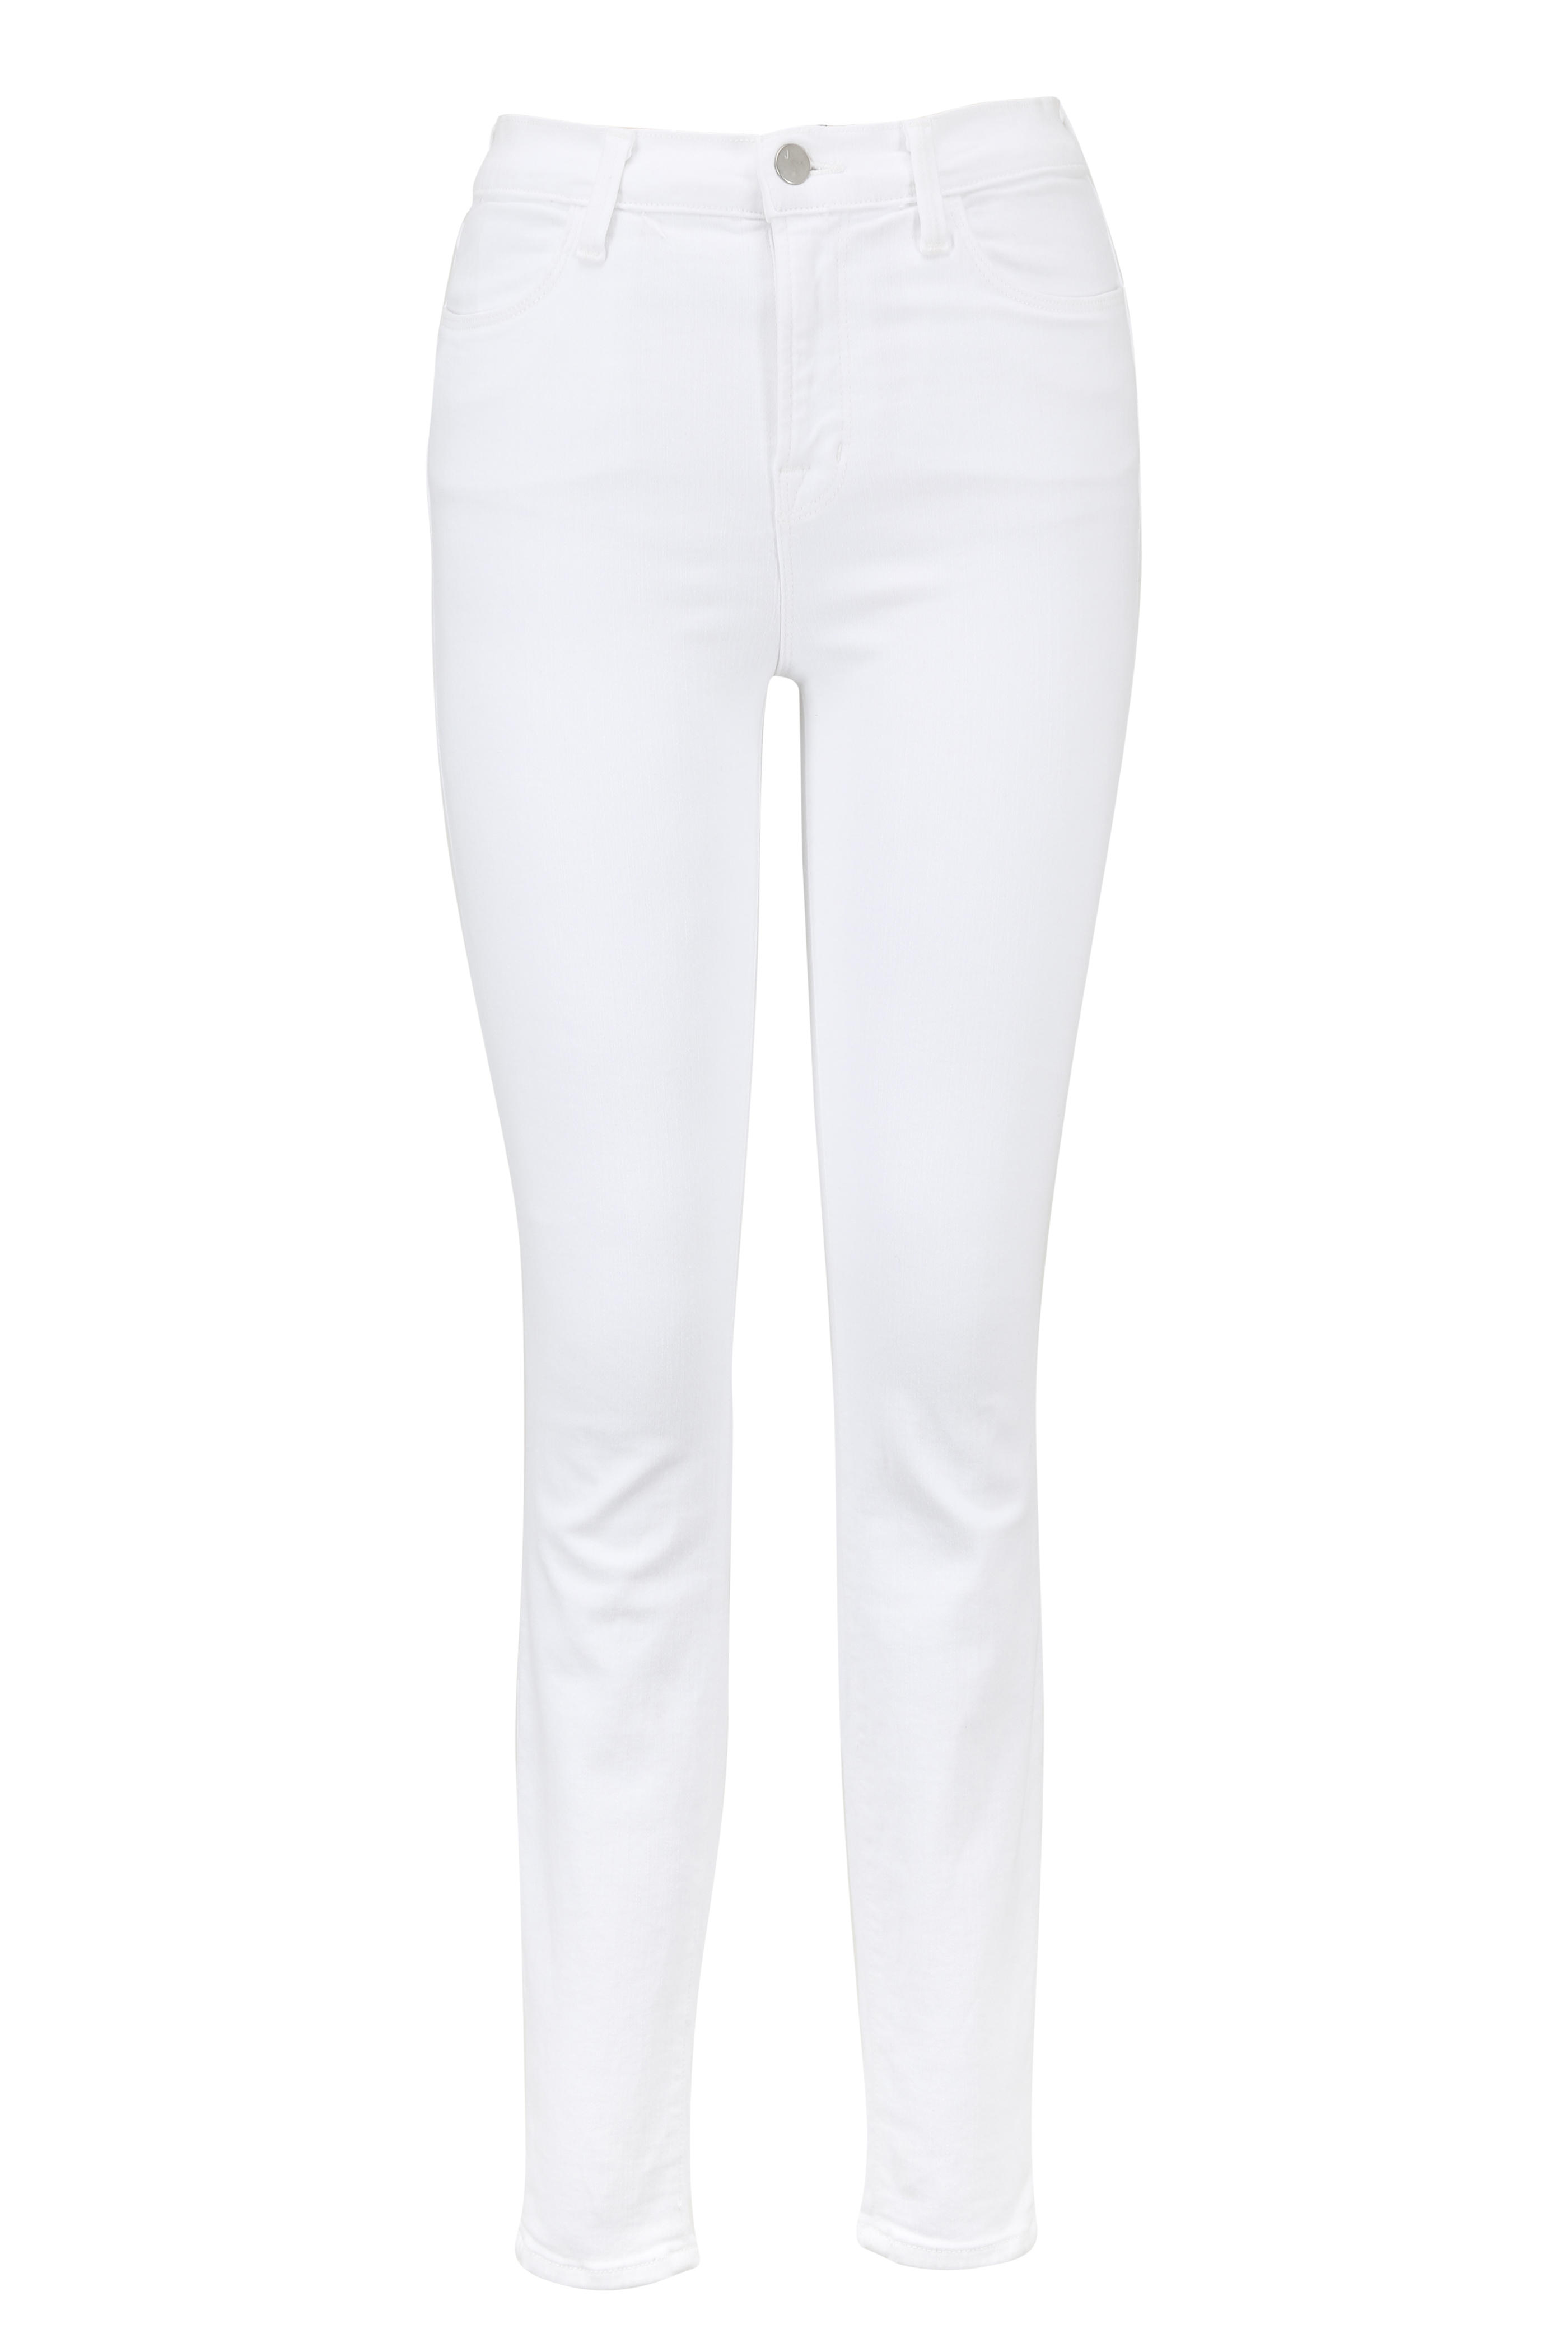 j brand white skinny jeans